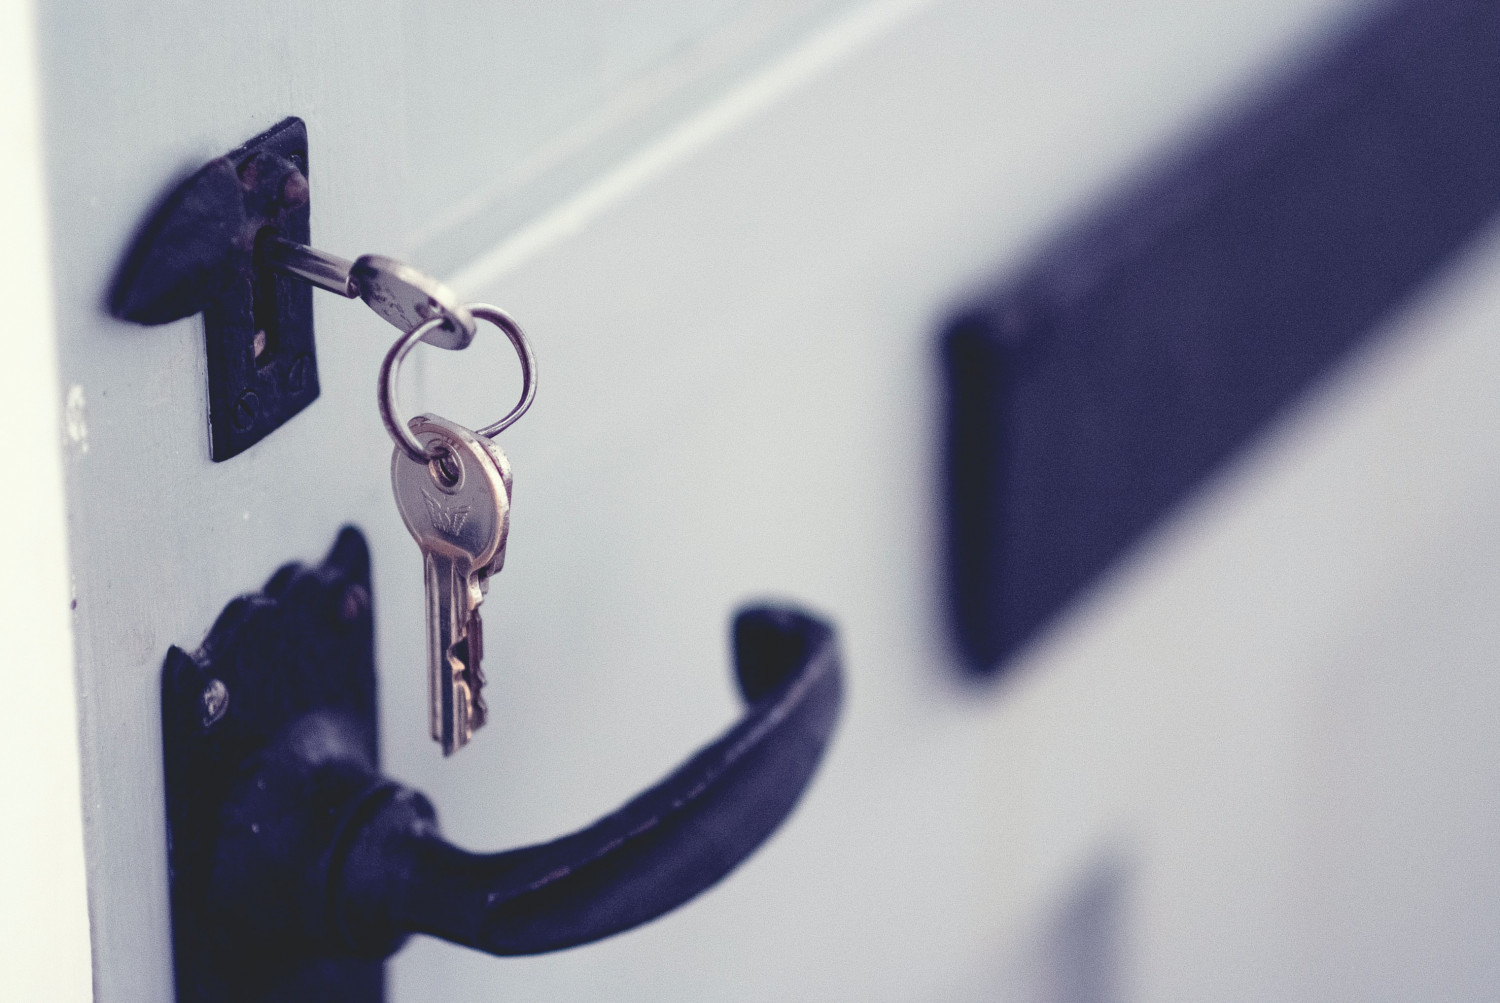 Image of a key in a locked door